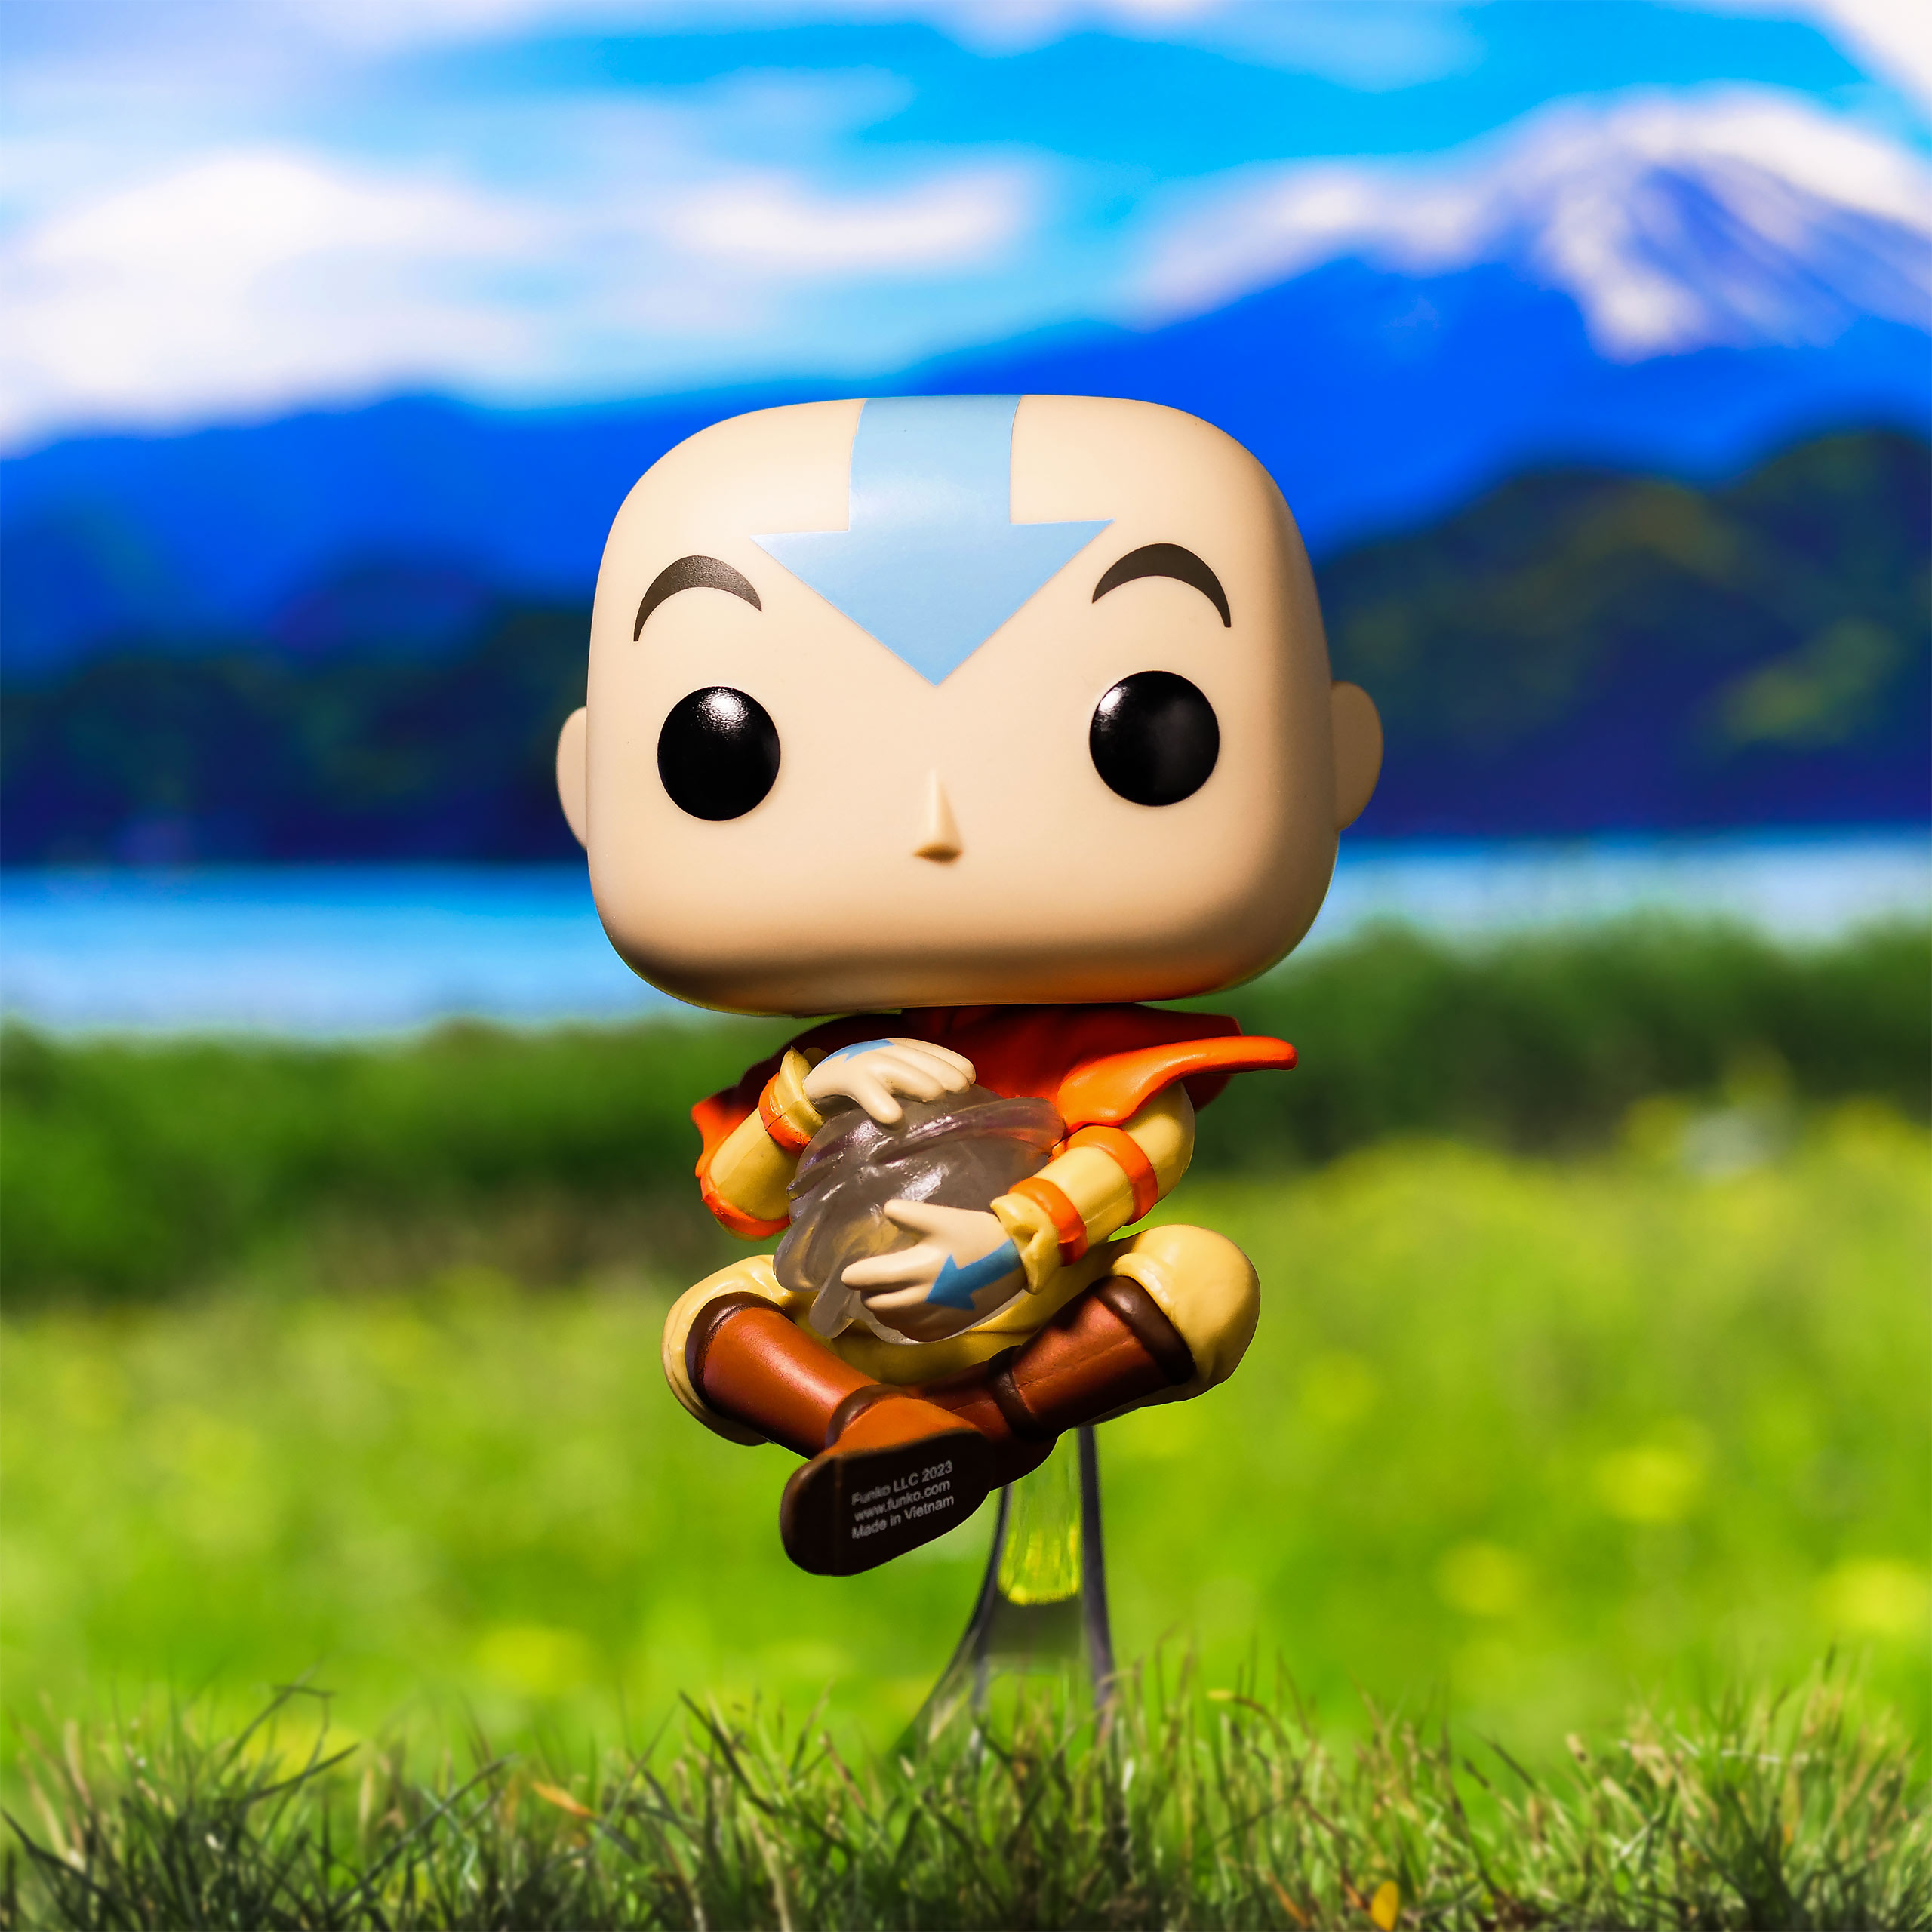 Avatar The Last Airbender - Aang Drijvend Funko Pop Figurine